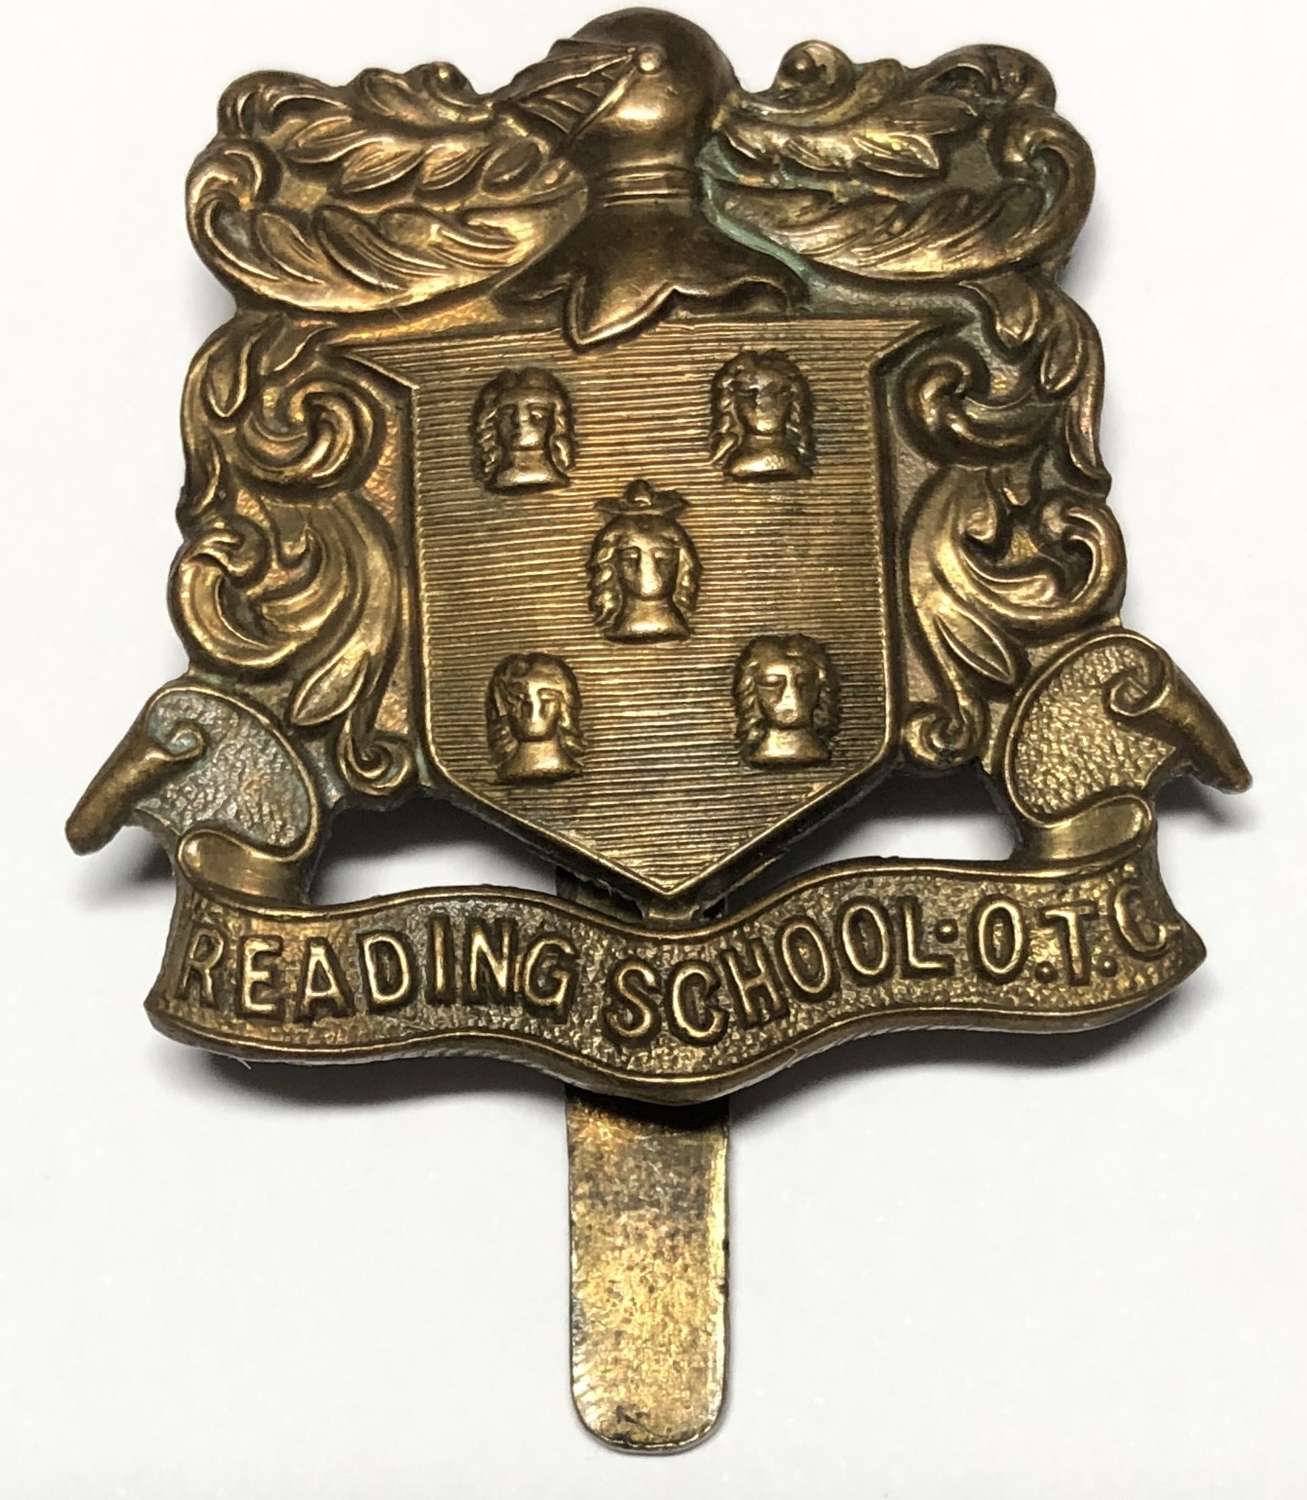 Reading School OTC  Berkshire cap badge circa 1908-40